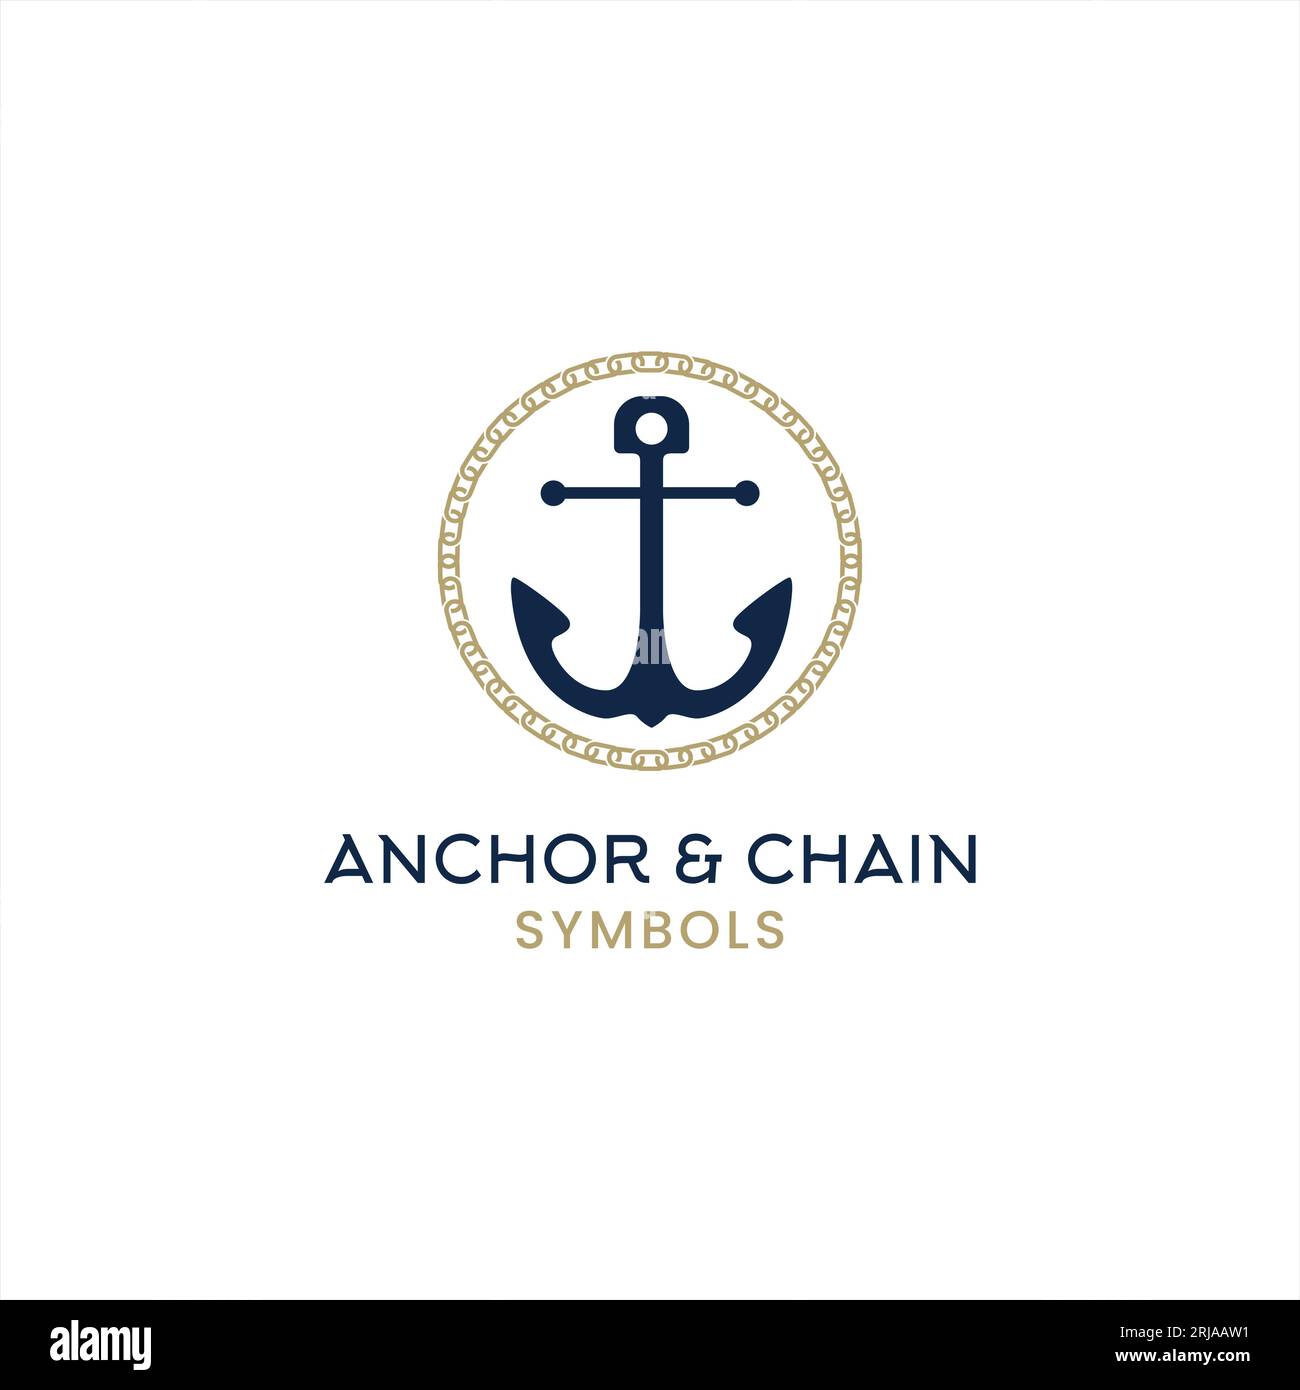 Anchor And Chain Circular Logo For Harbor, Marine, Cruise Design Inspiration Stock Vector